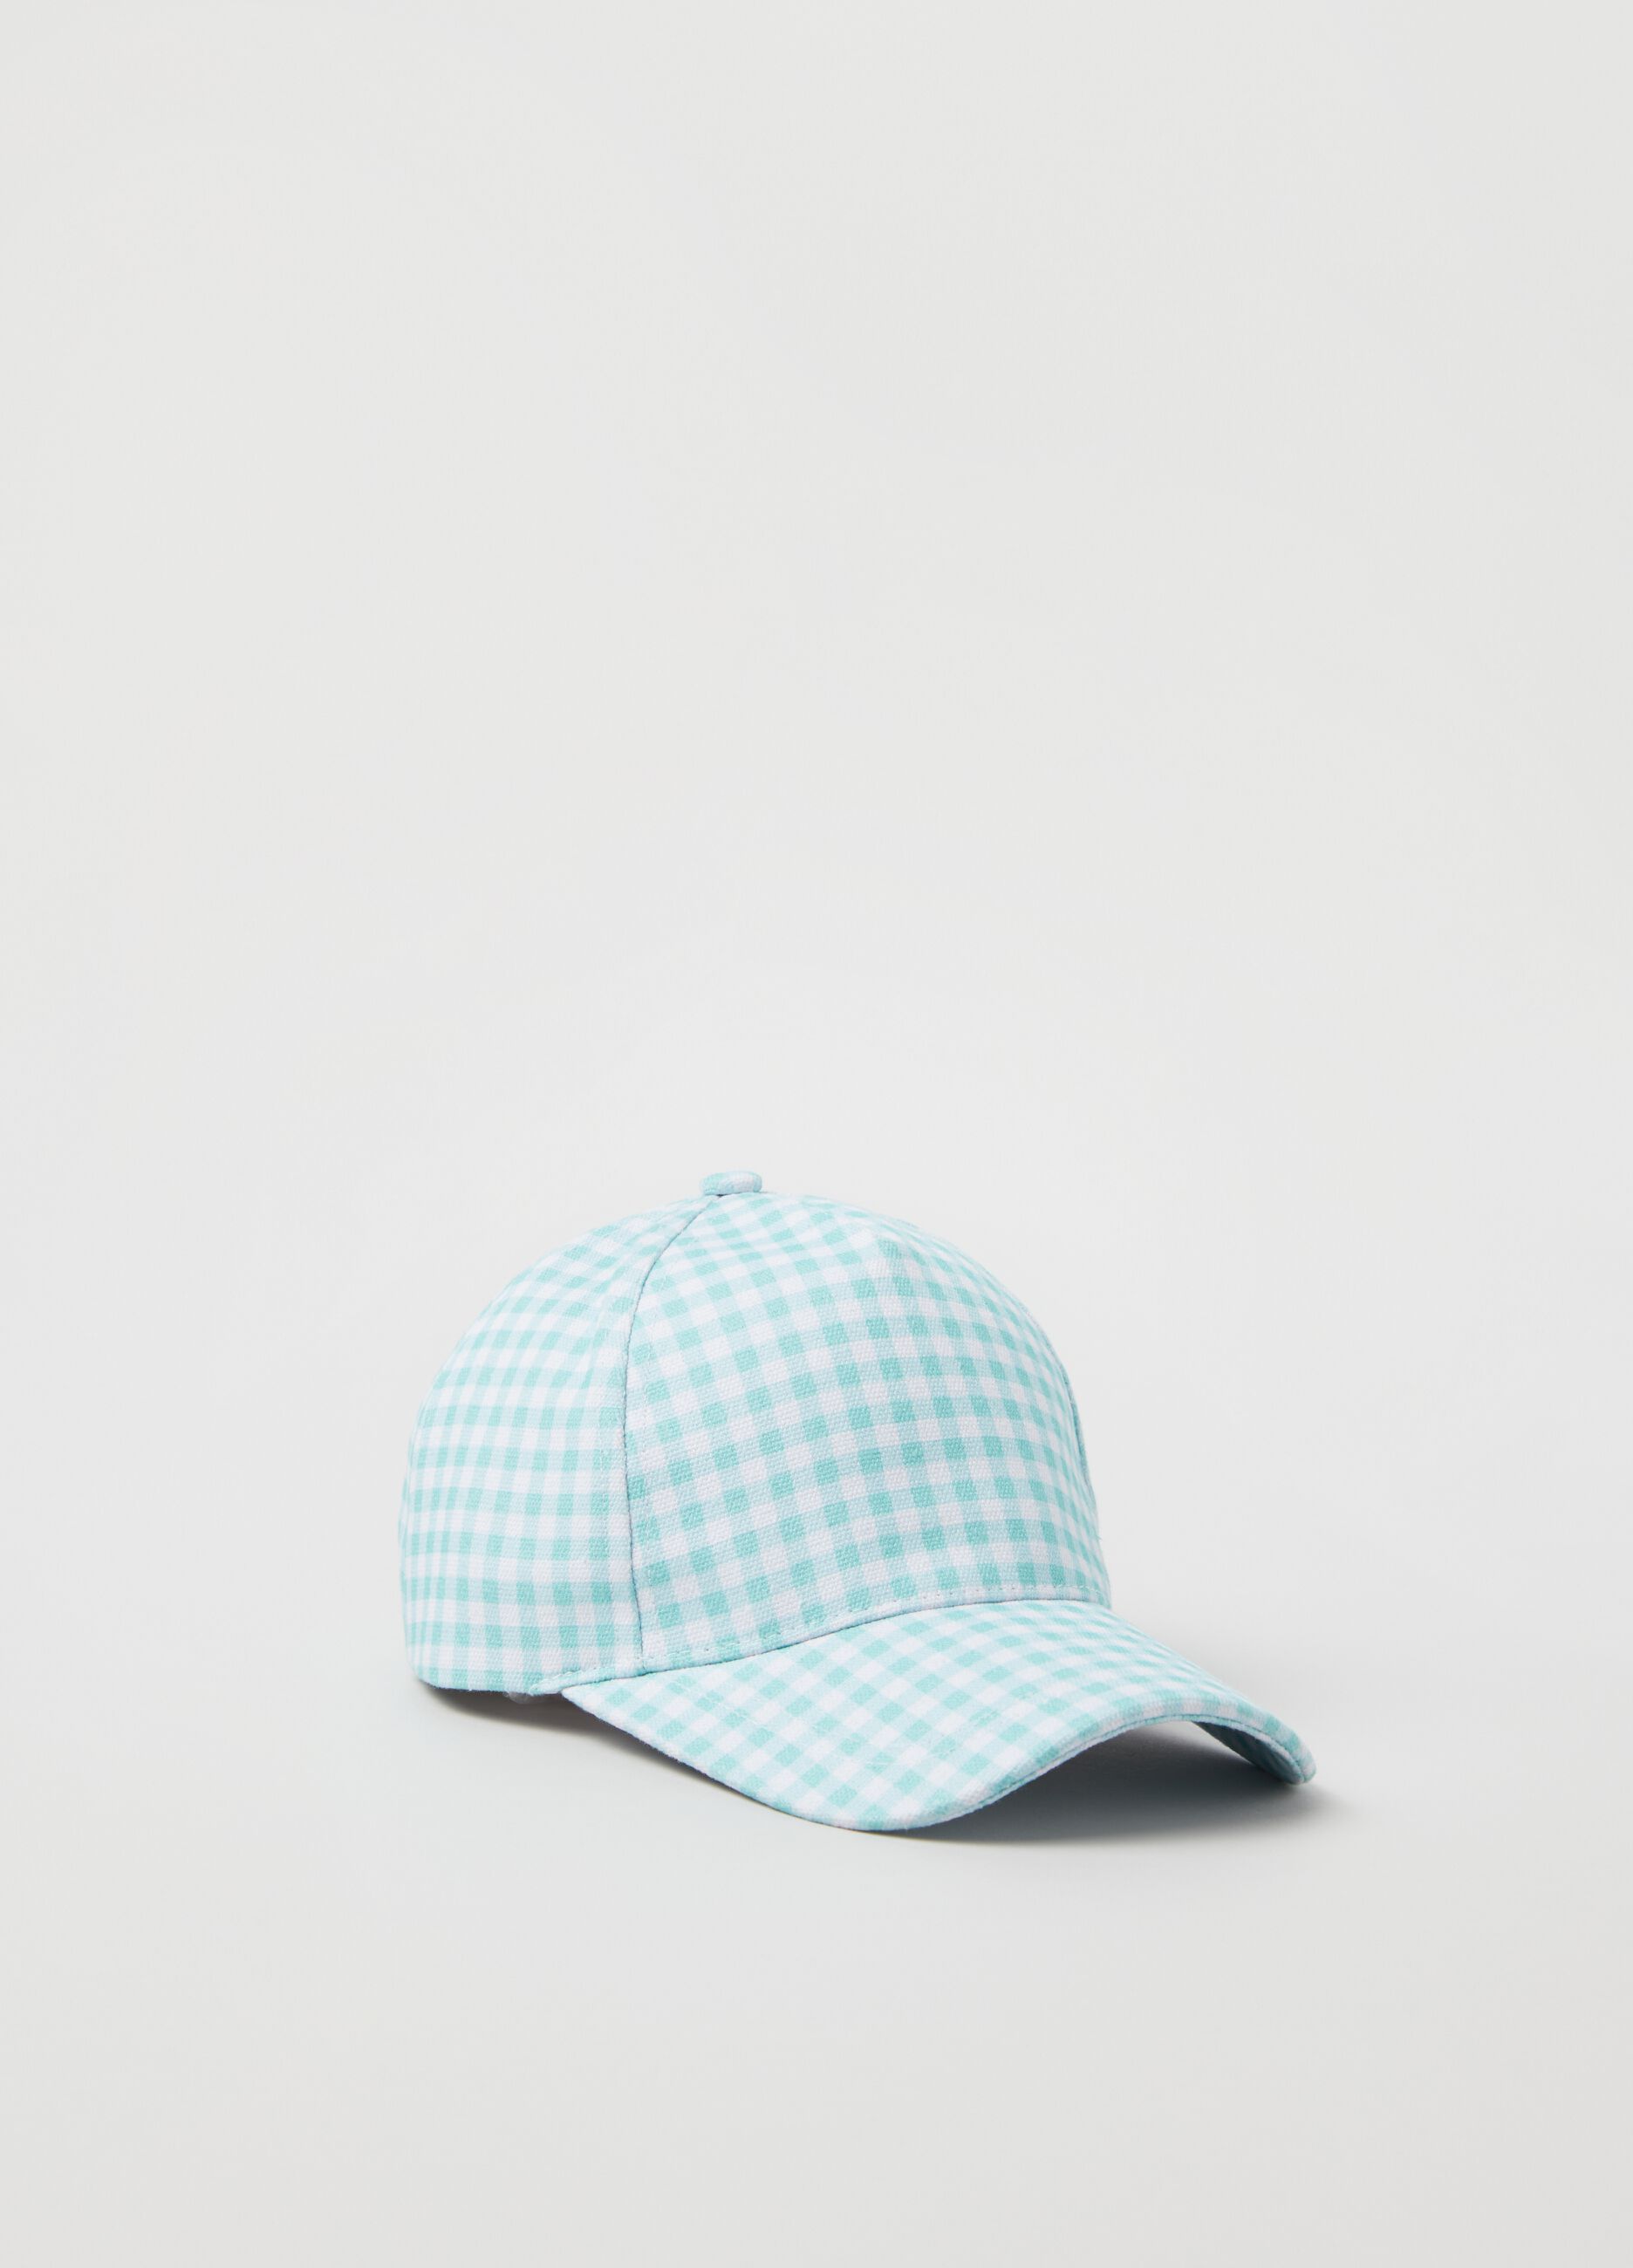 Baseball cap with check print